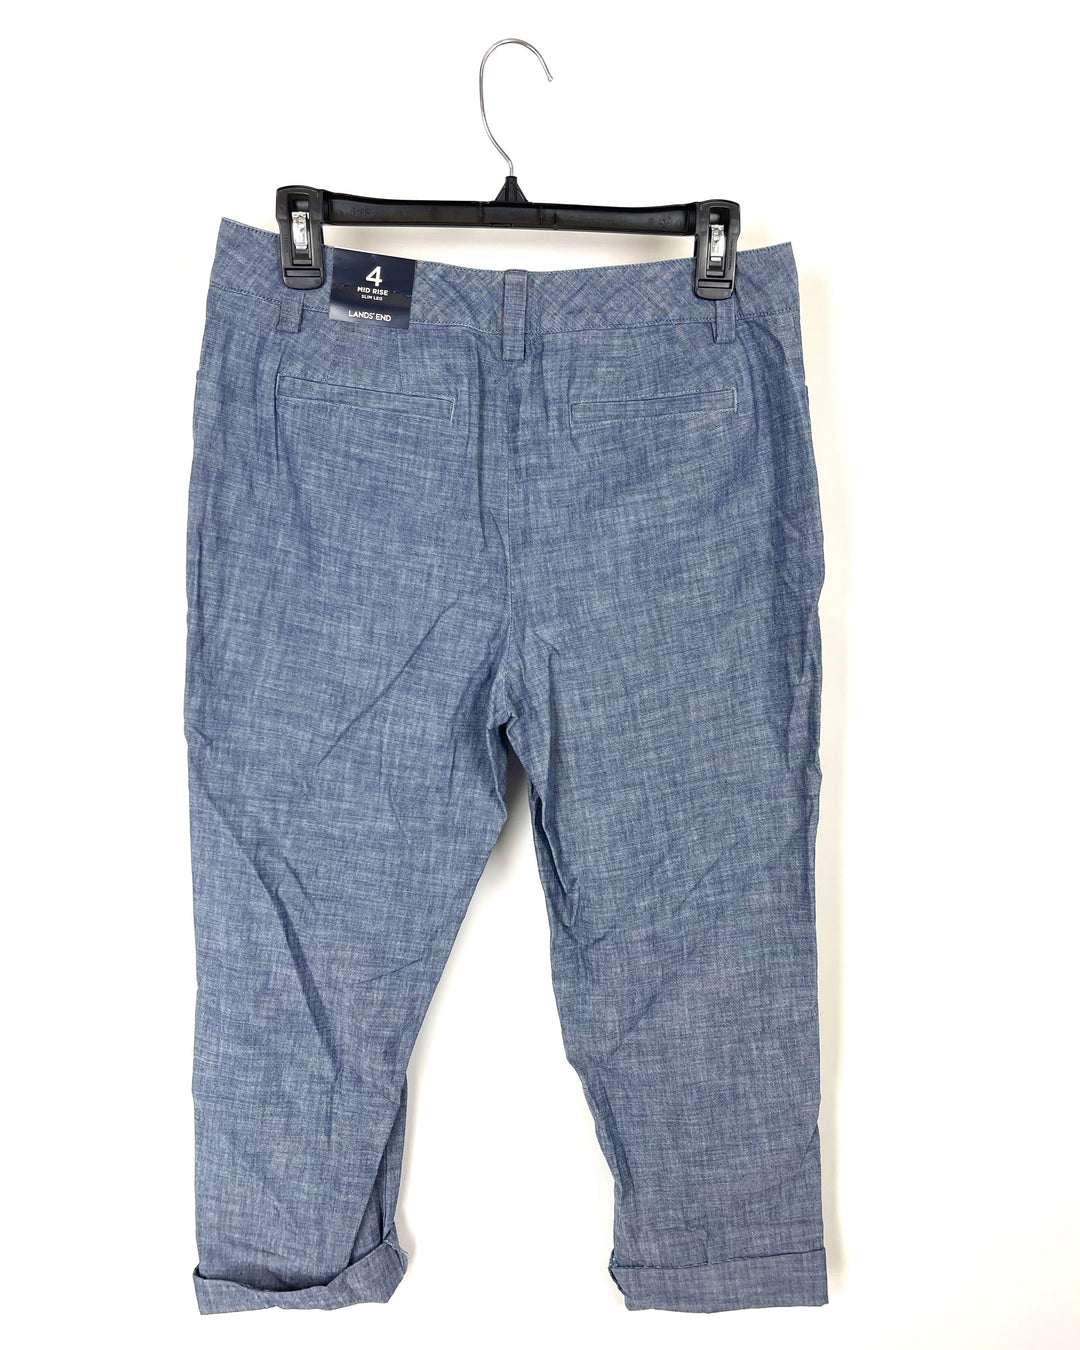 Cropped Pants - Size 4